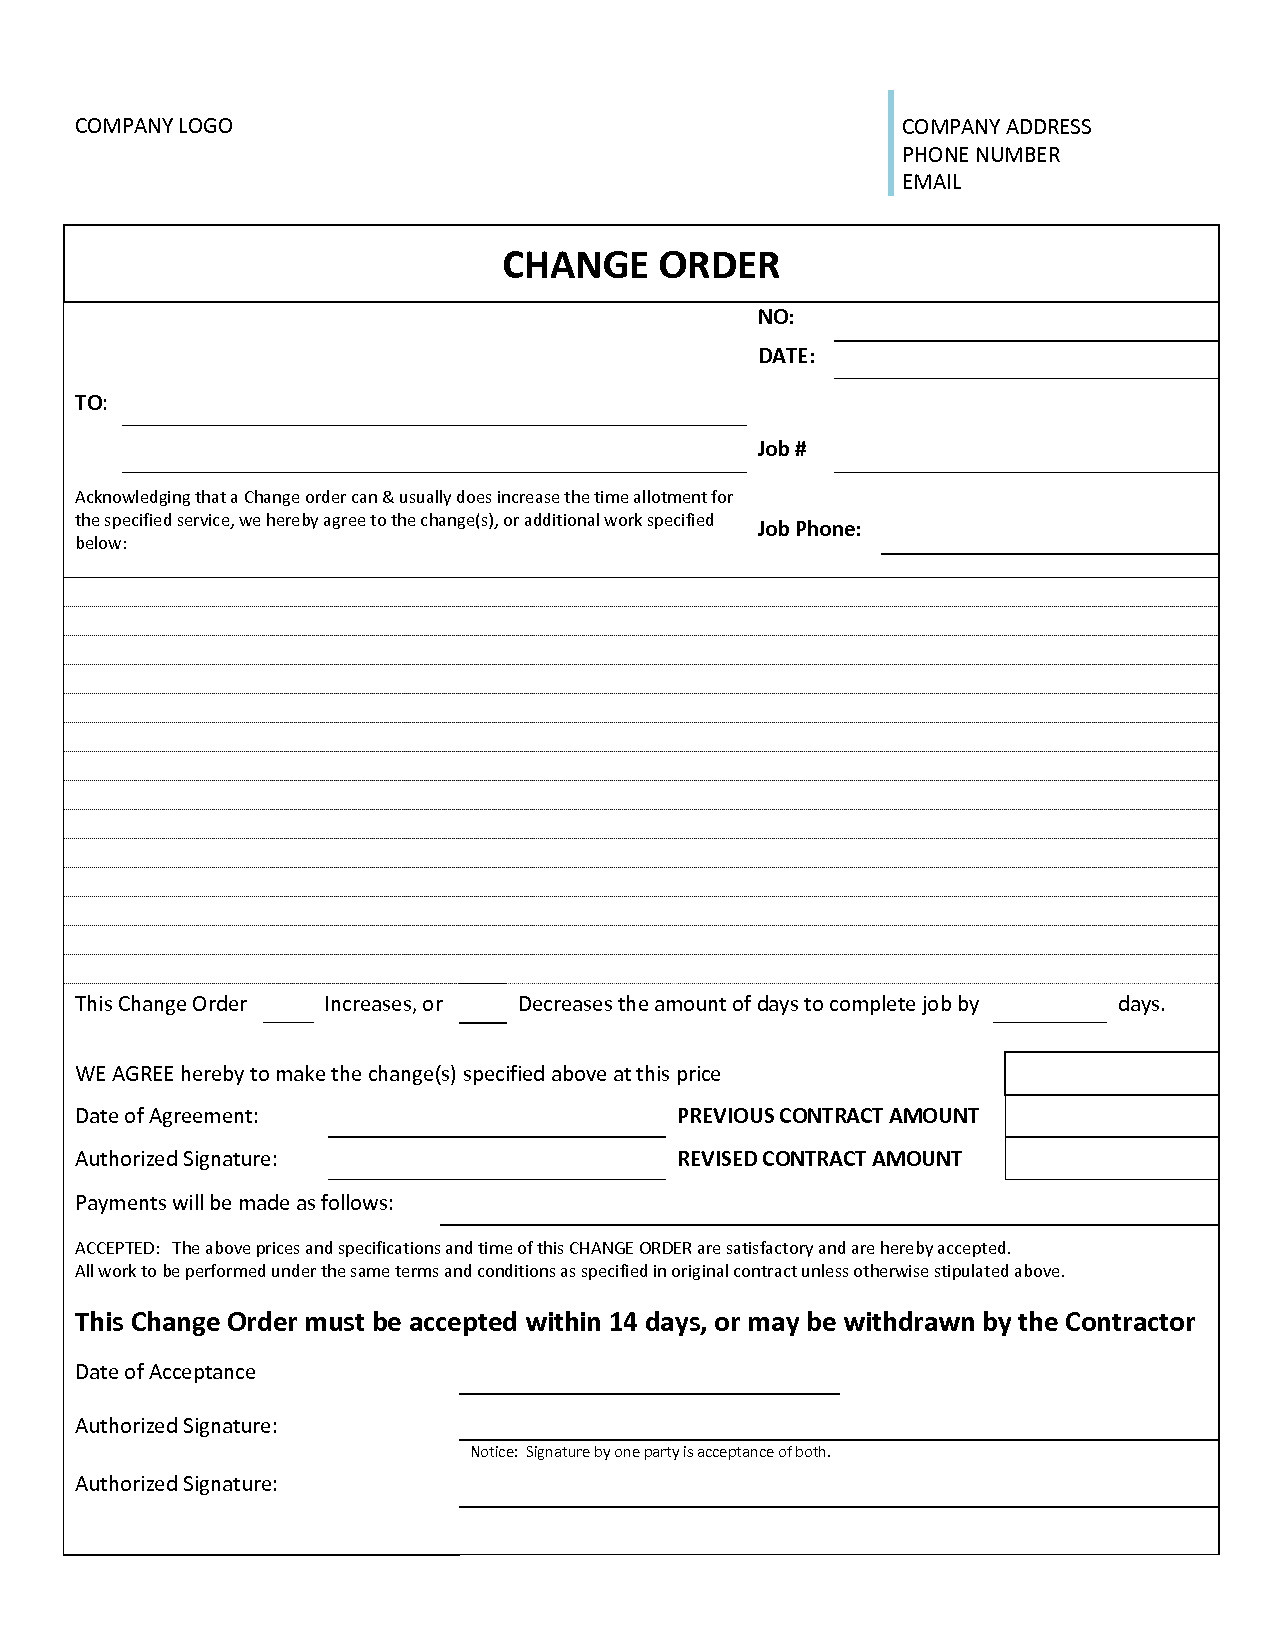 Change Order Form Template